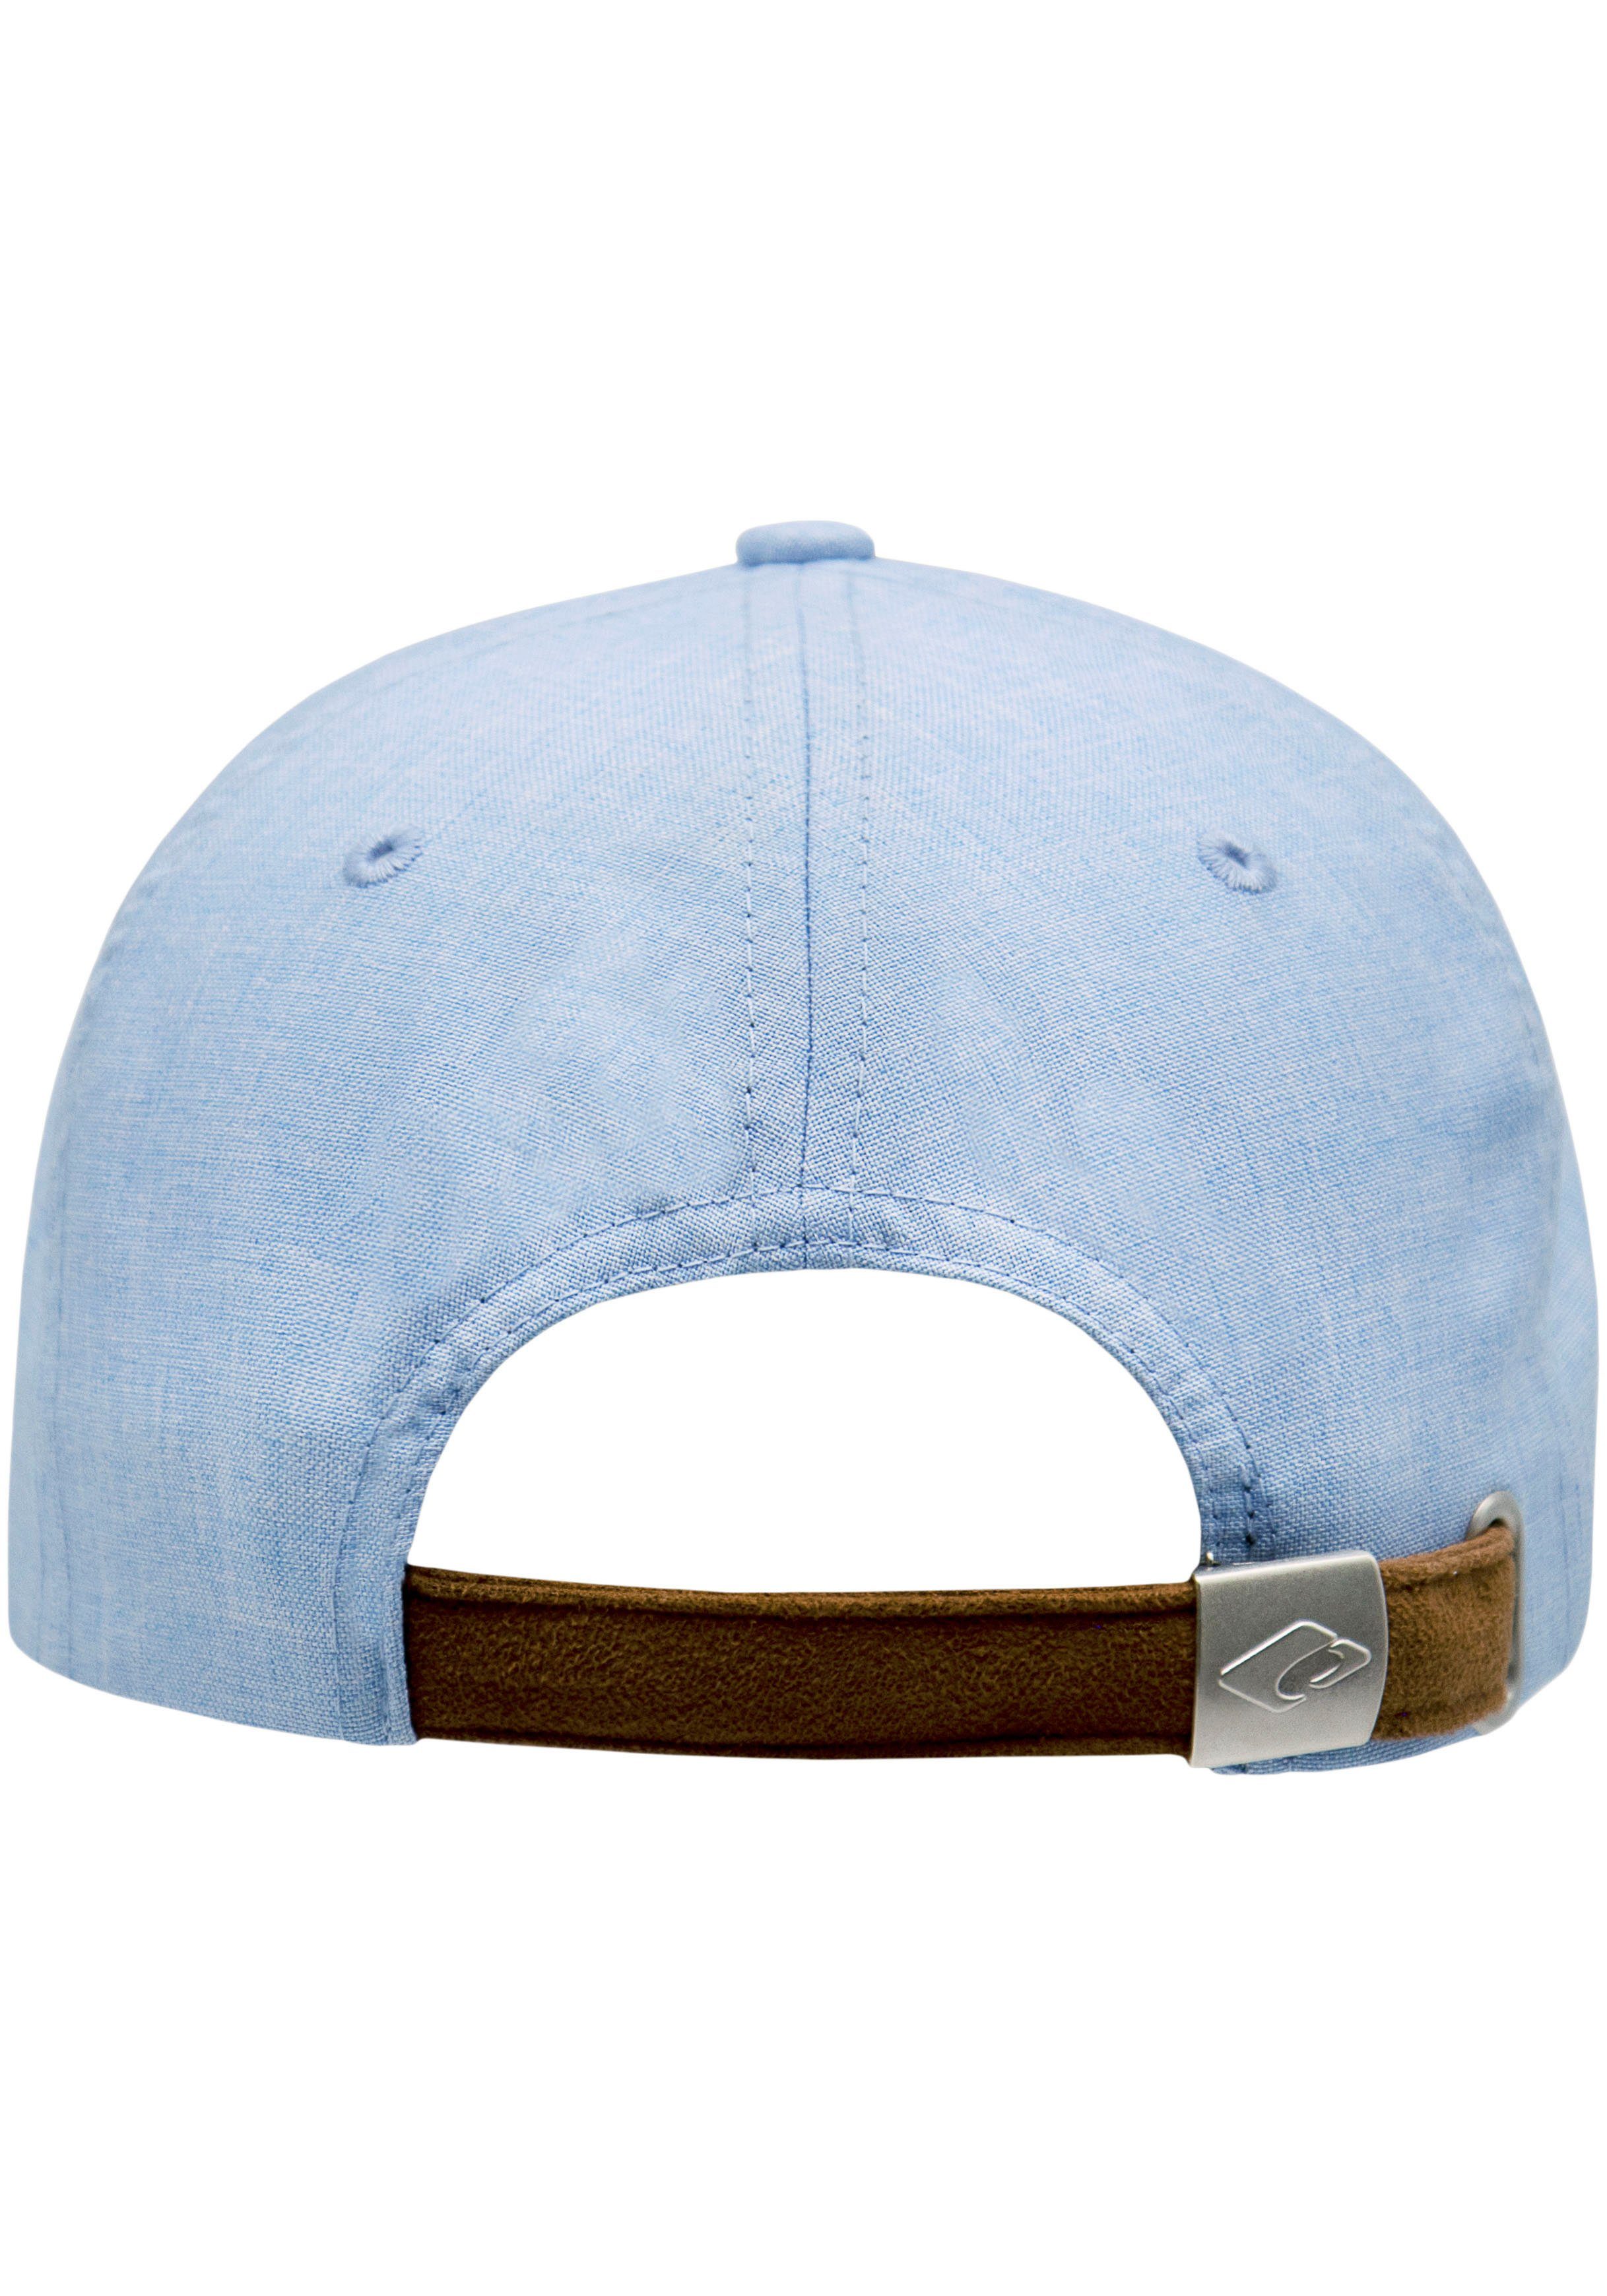 chillouts Baseball Hat One melierter Size, hellblau Optik, in Amadora verstellbar Cap